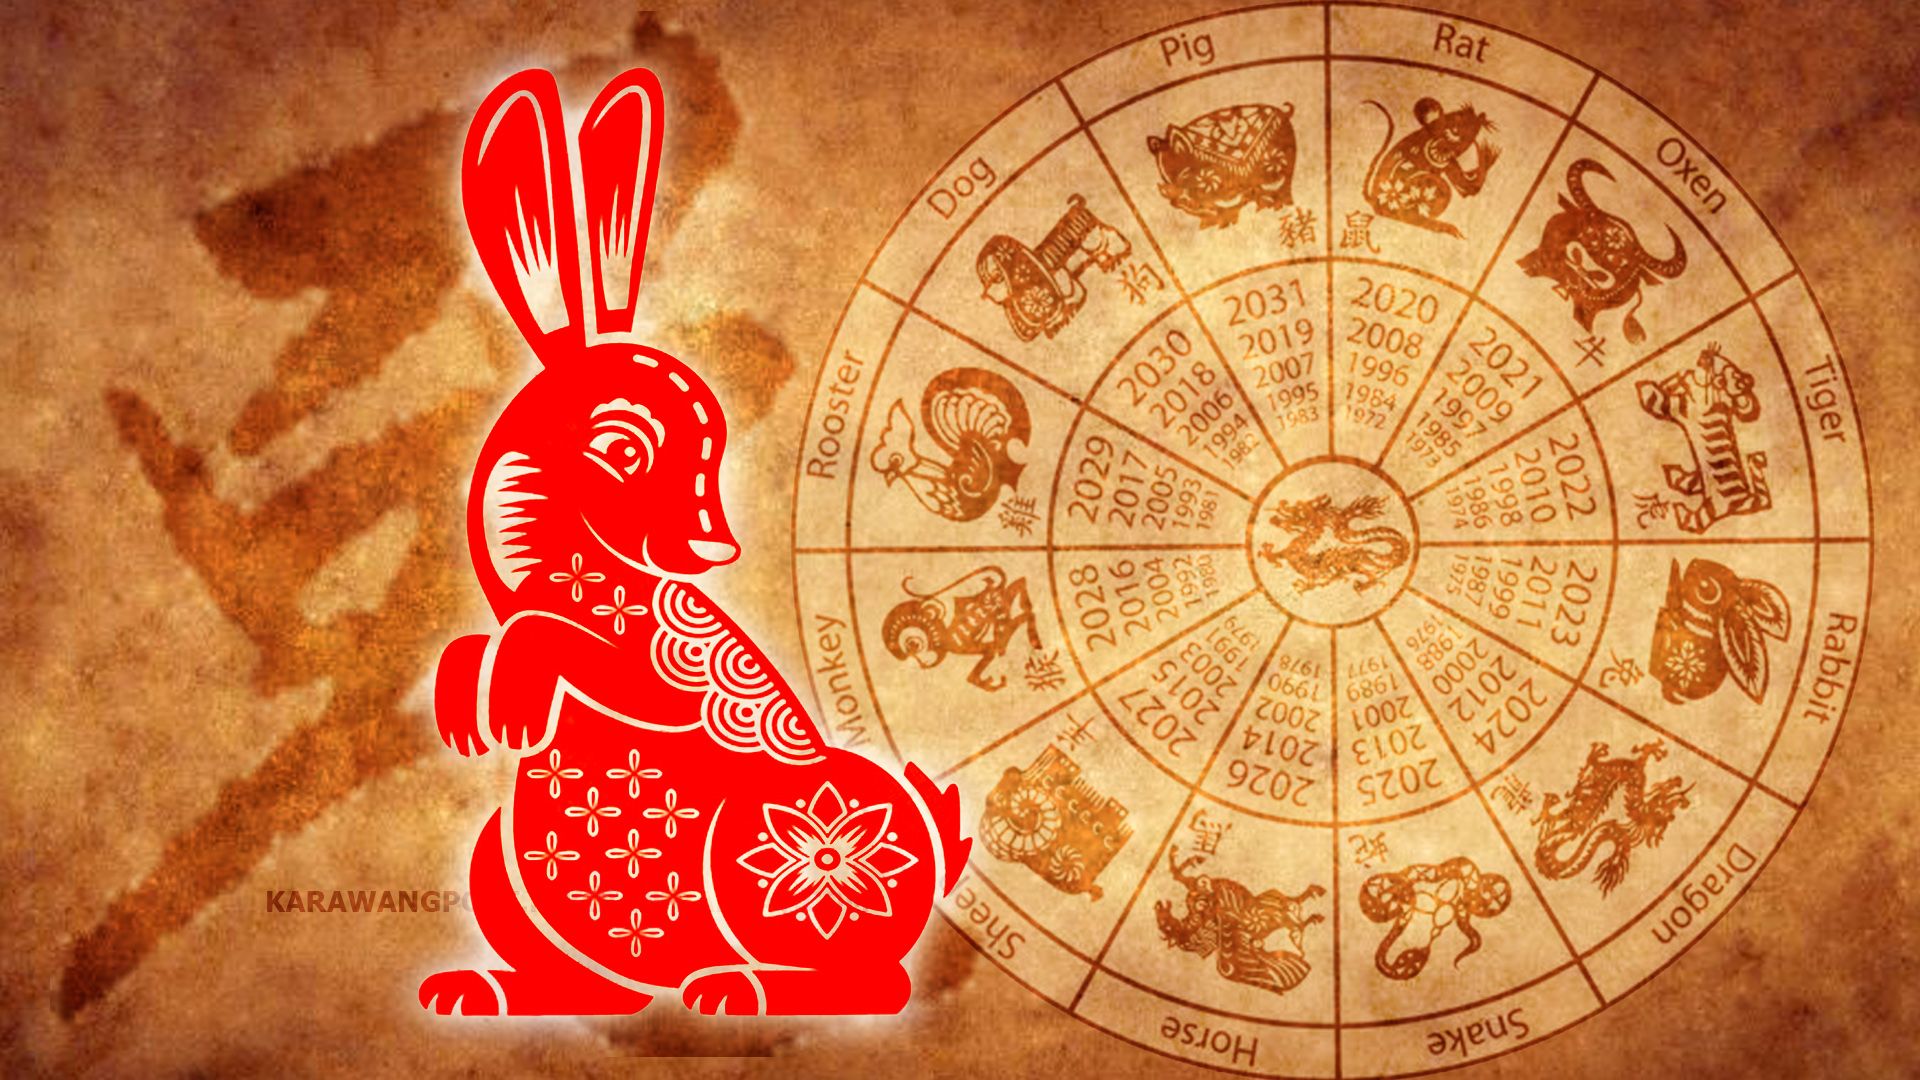 Ilutrasi Shio Kelinci Dalam Astrologi Cina